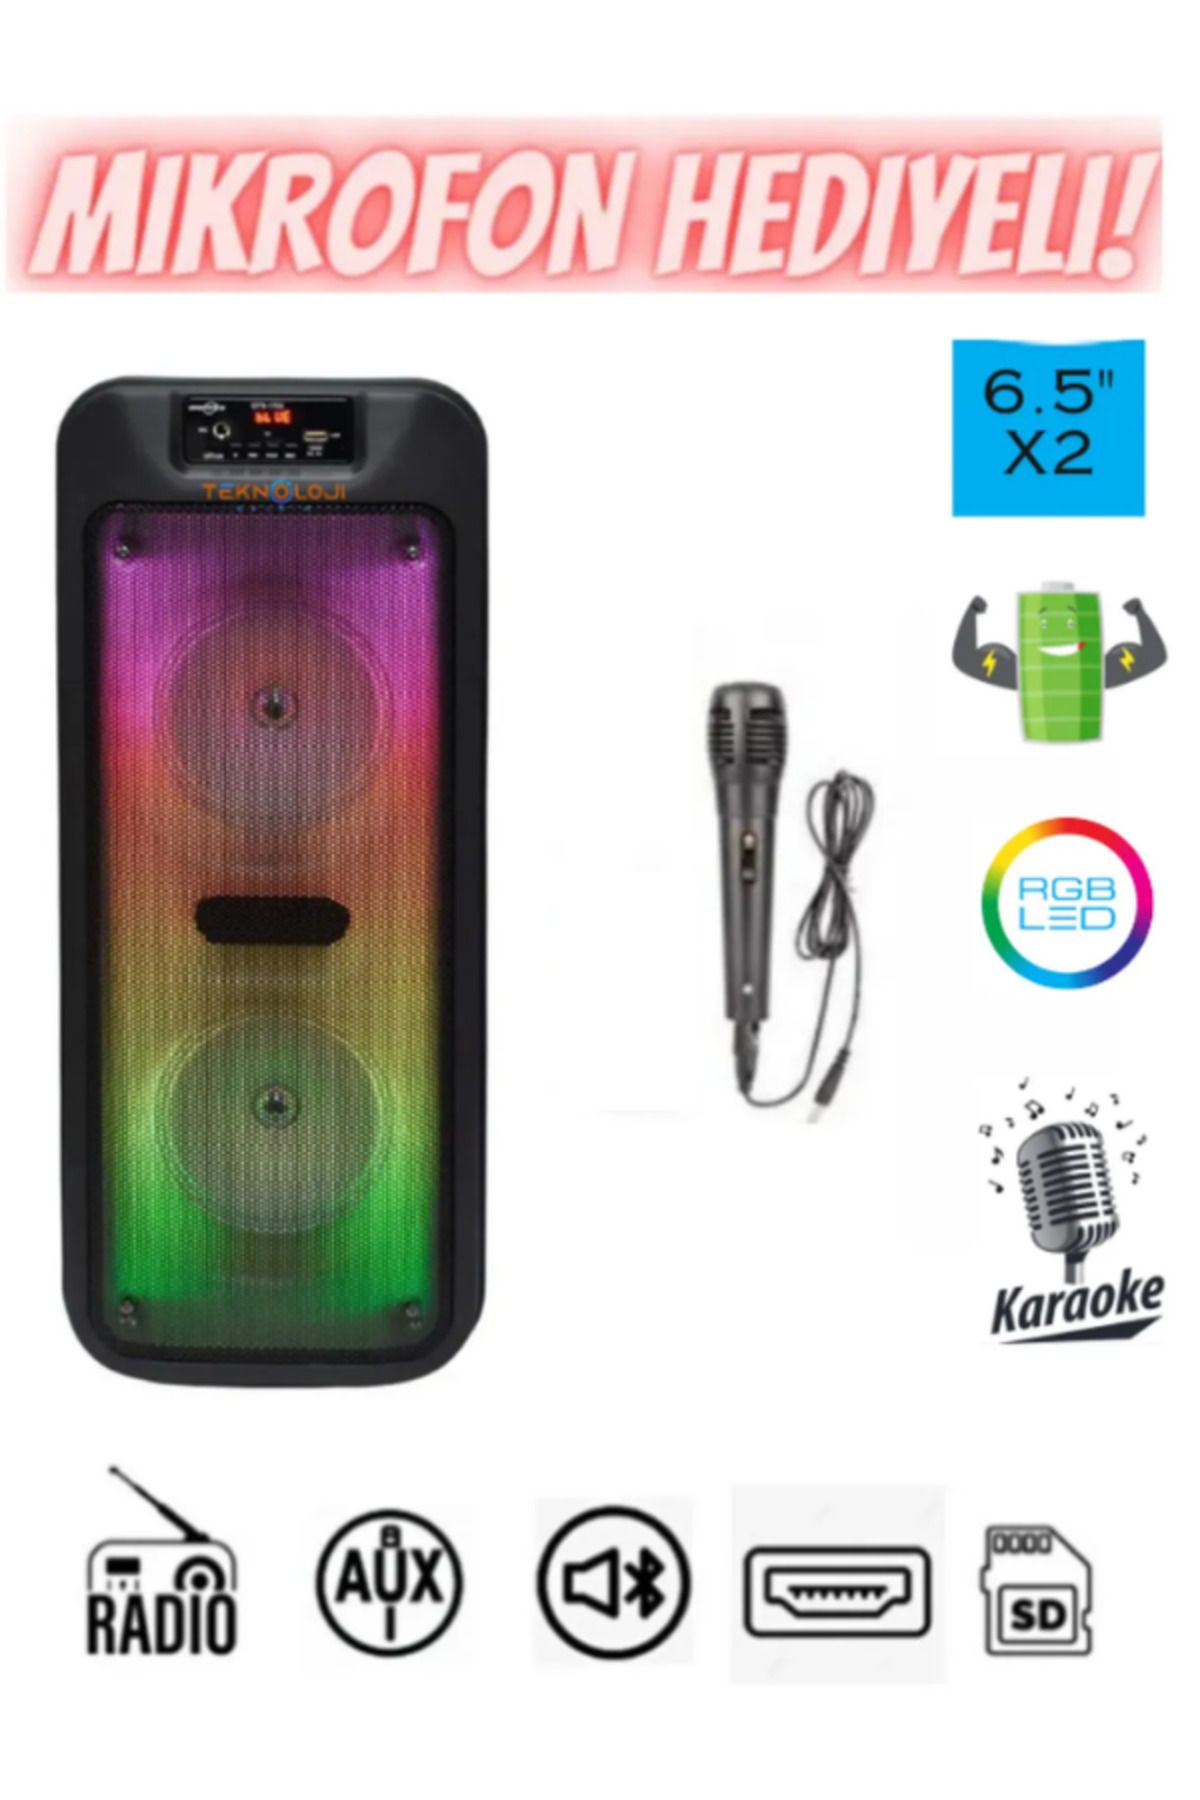 Teknoloji Gelsin Karaoke Kablosuz Hoparlör 6.5"X2 Büyük Boy Bluetooth Speaker Mikrofon Işıklı Parti FmRadyo Aux Usb